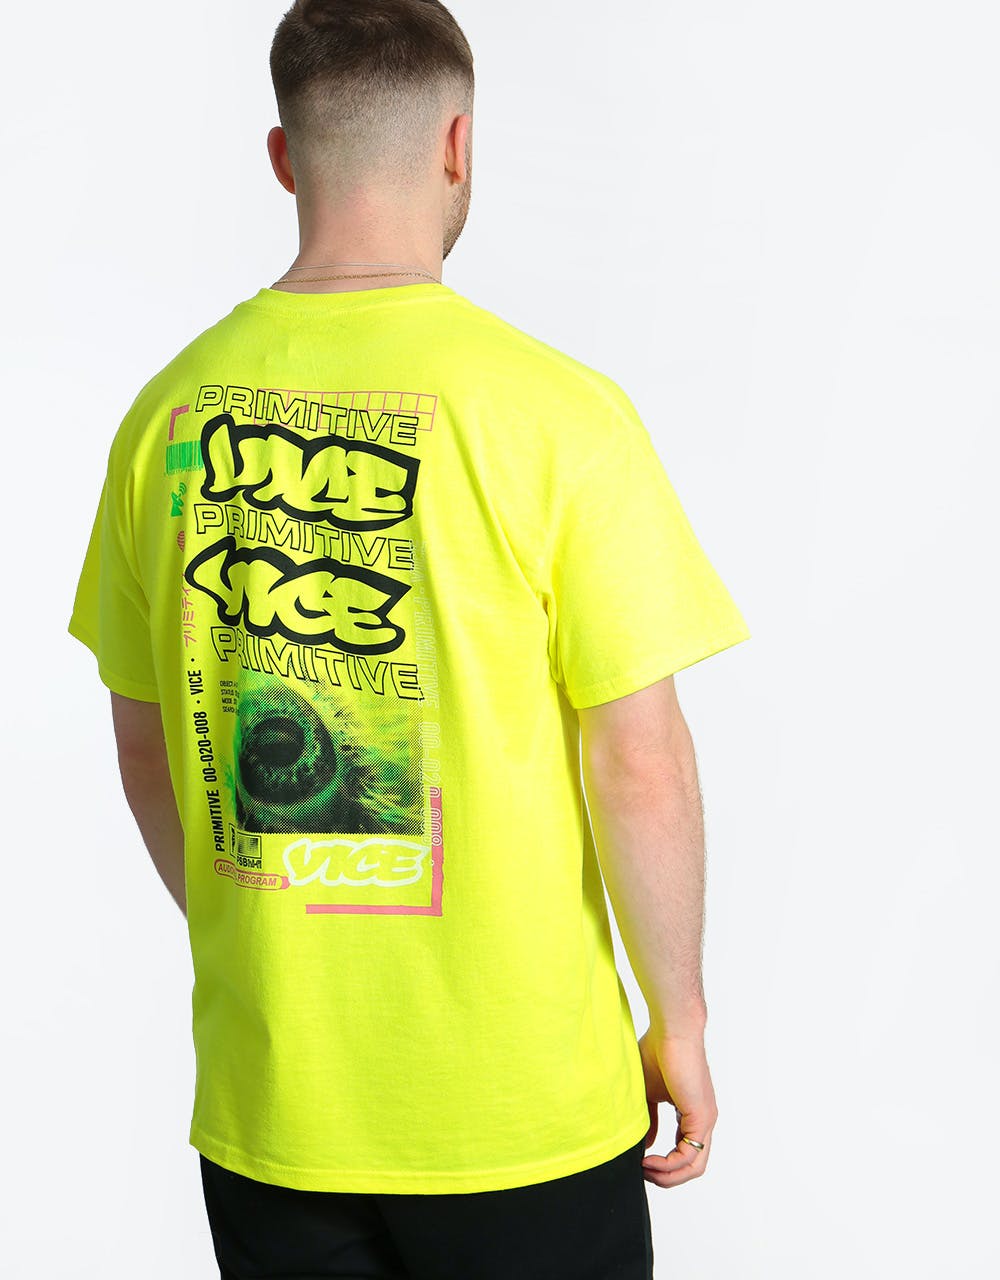 Primitive x Vice Program T-Shirt - Safety Green